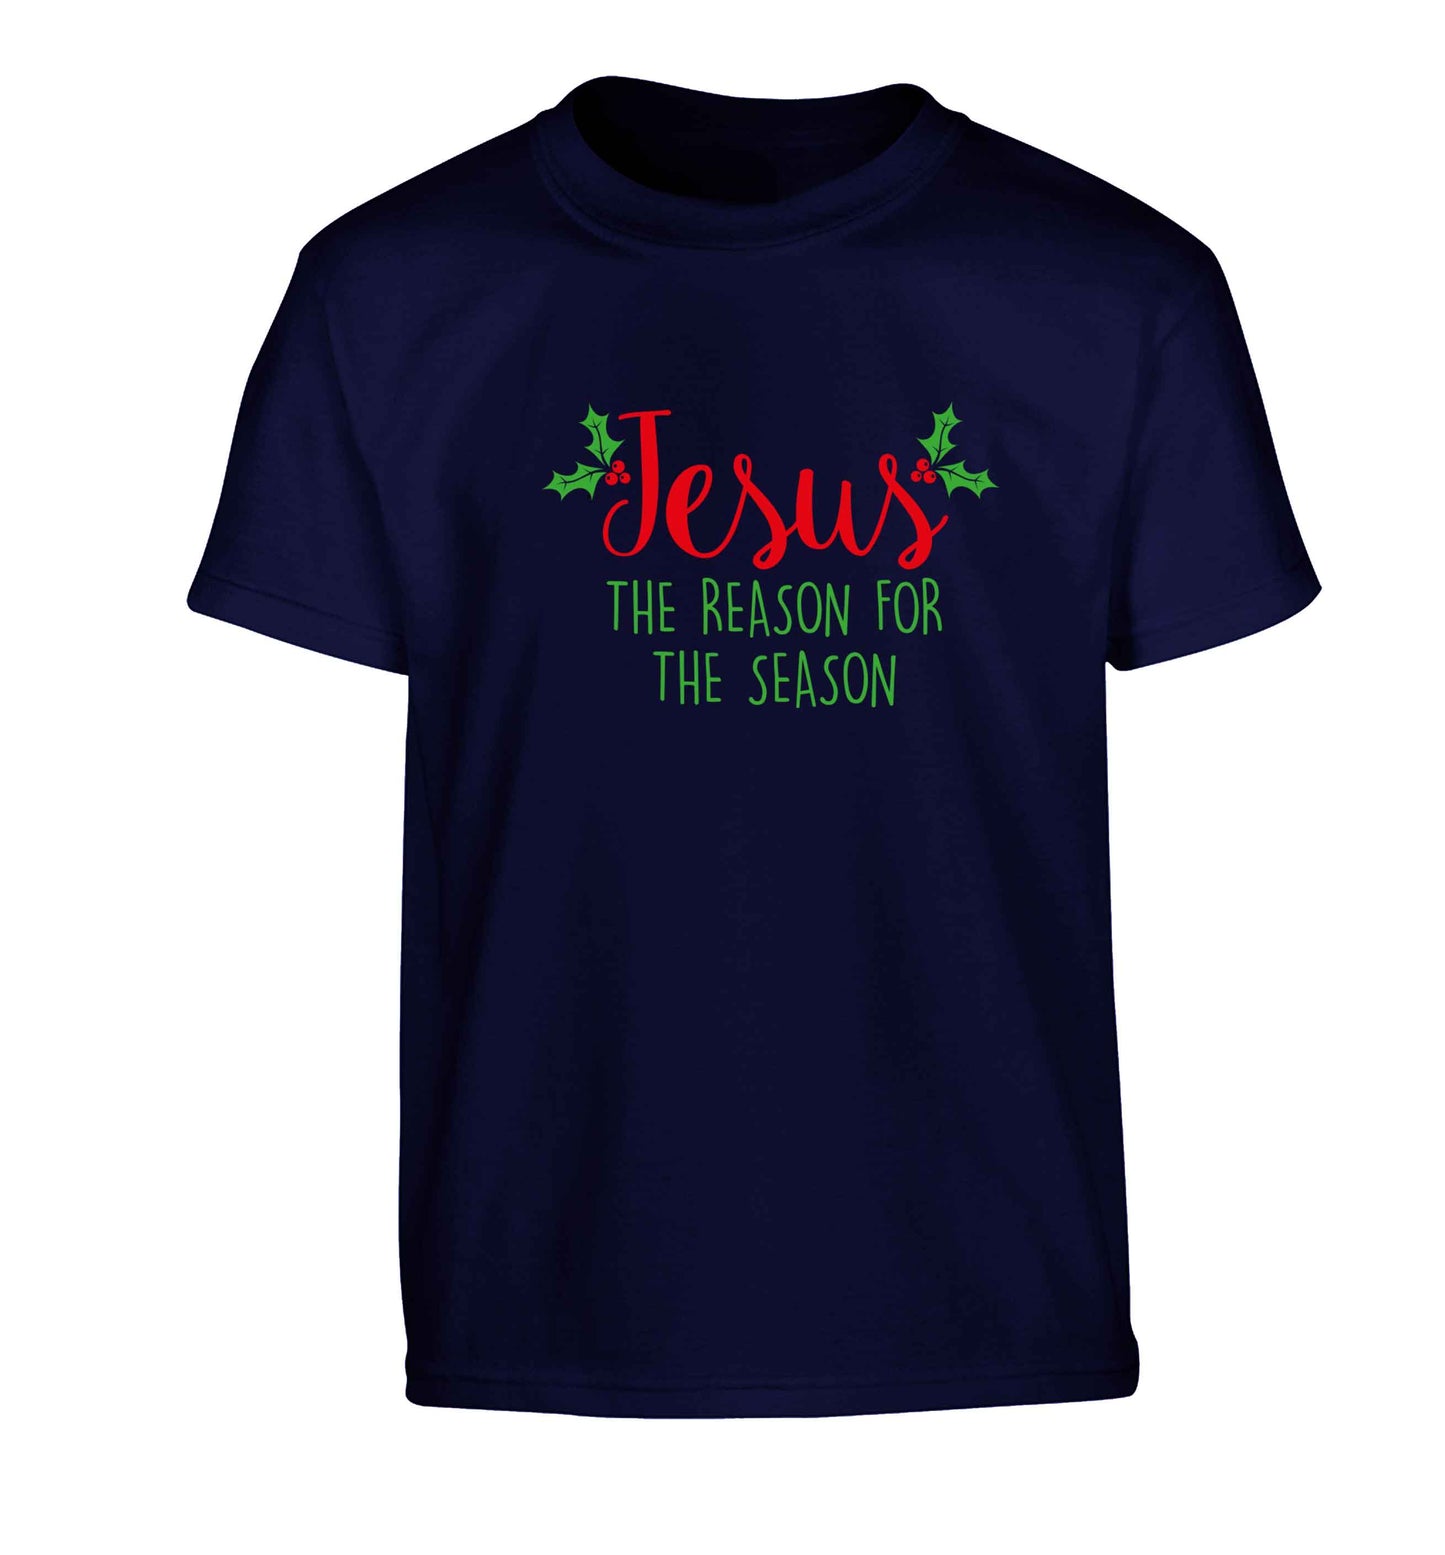 Jesus the reason for the season Children's navy Tshirt 12-13 Years